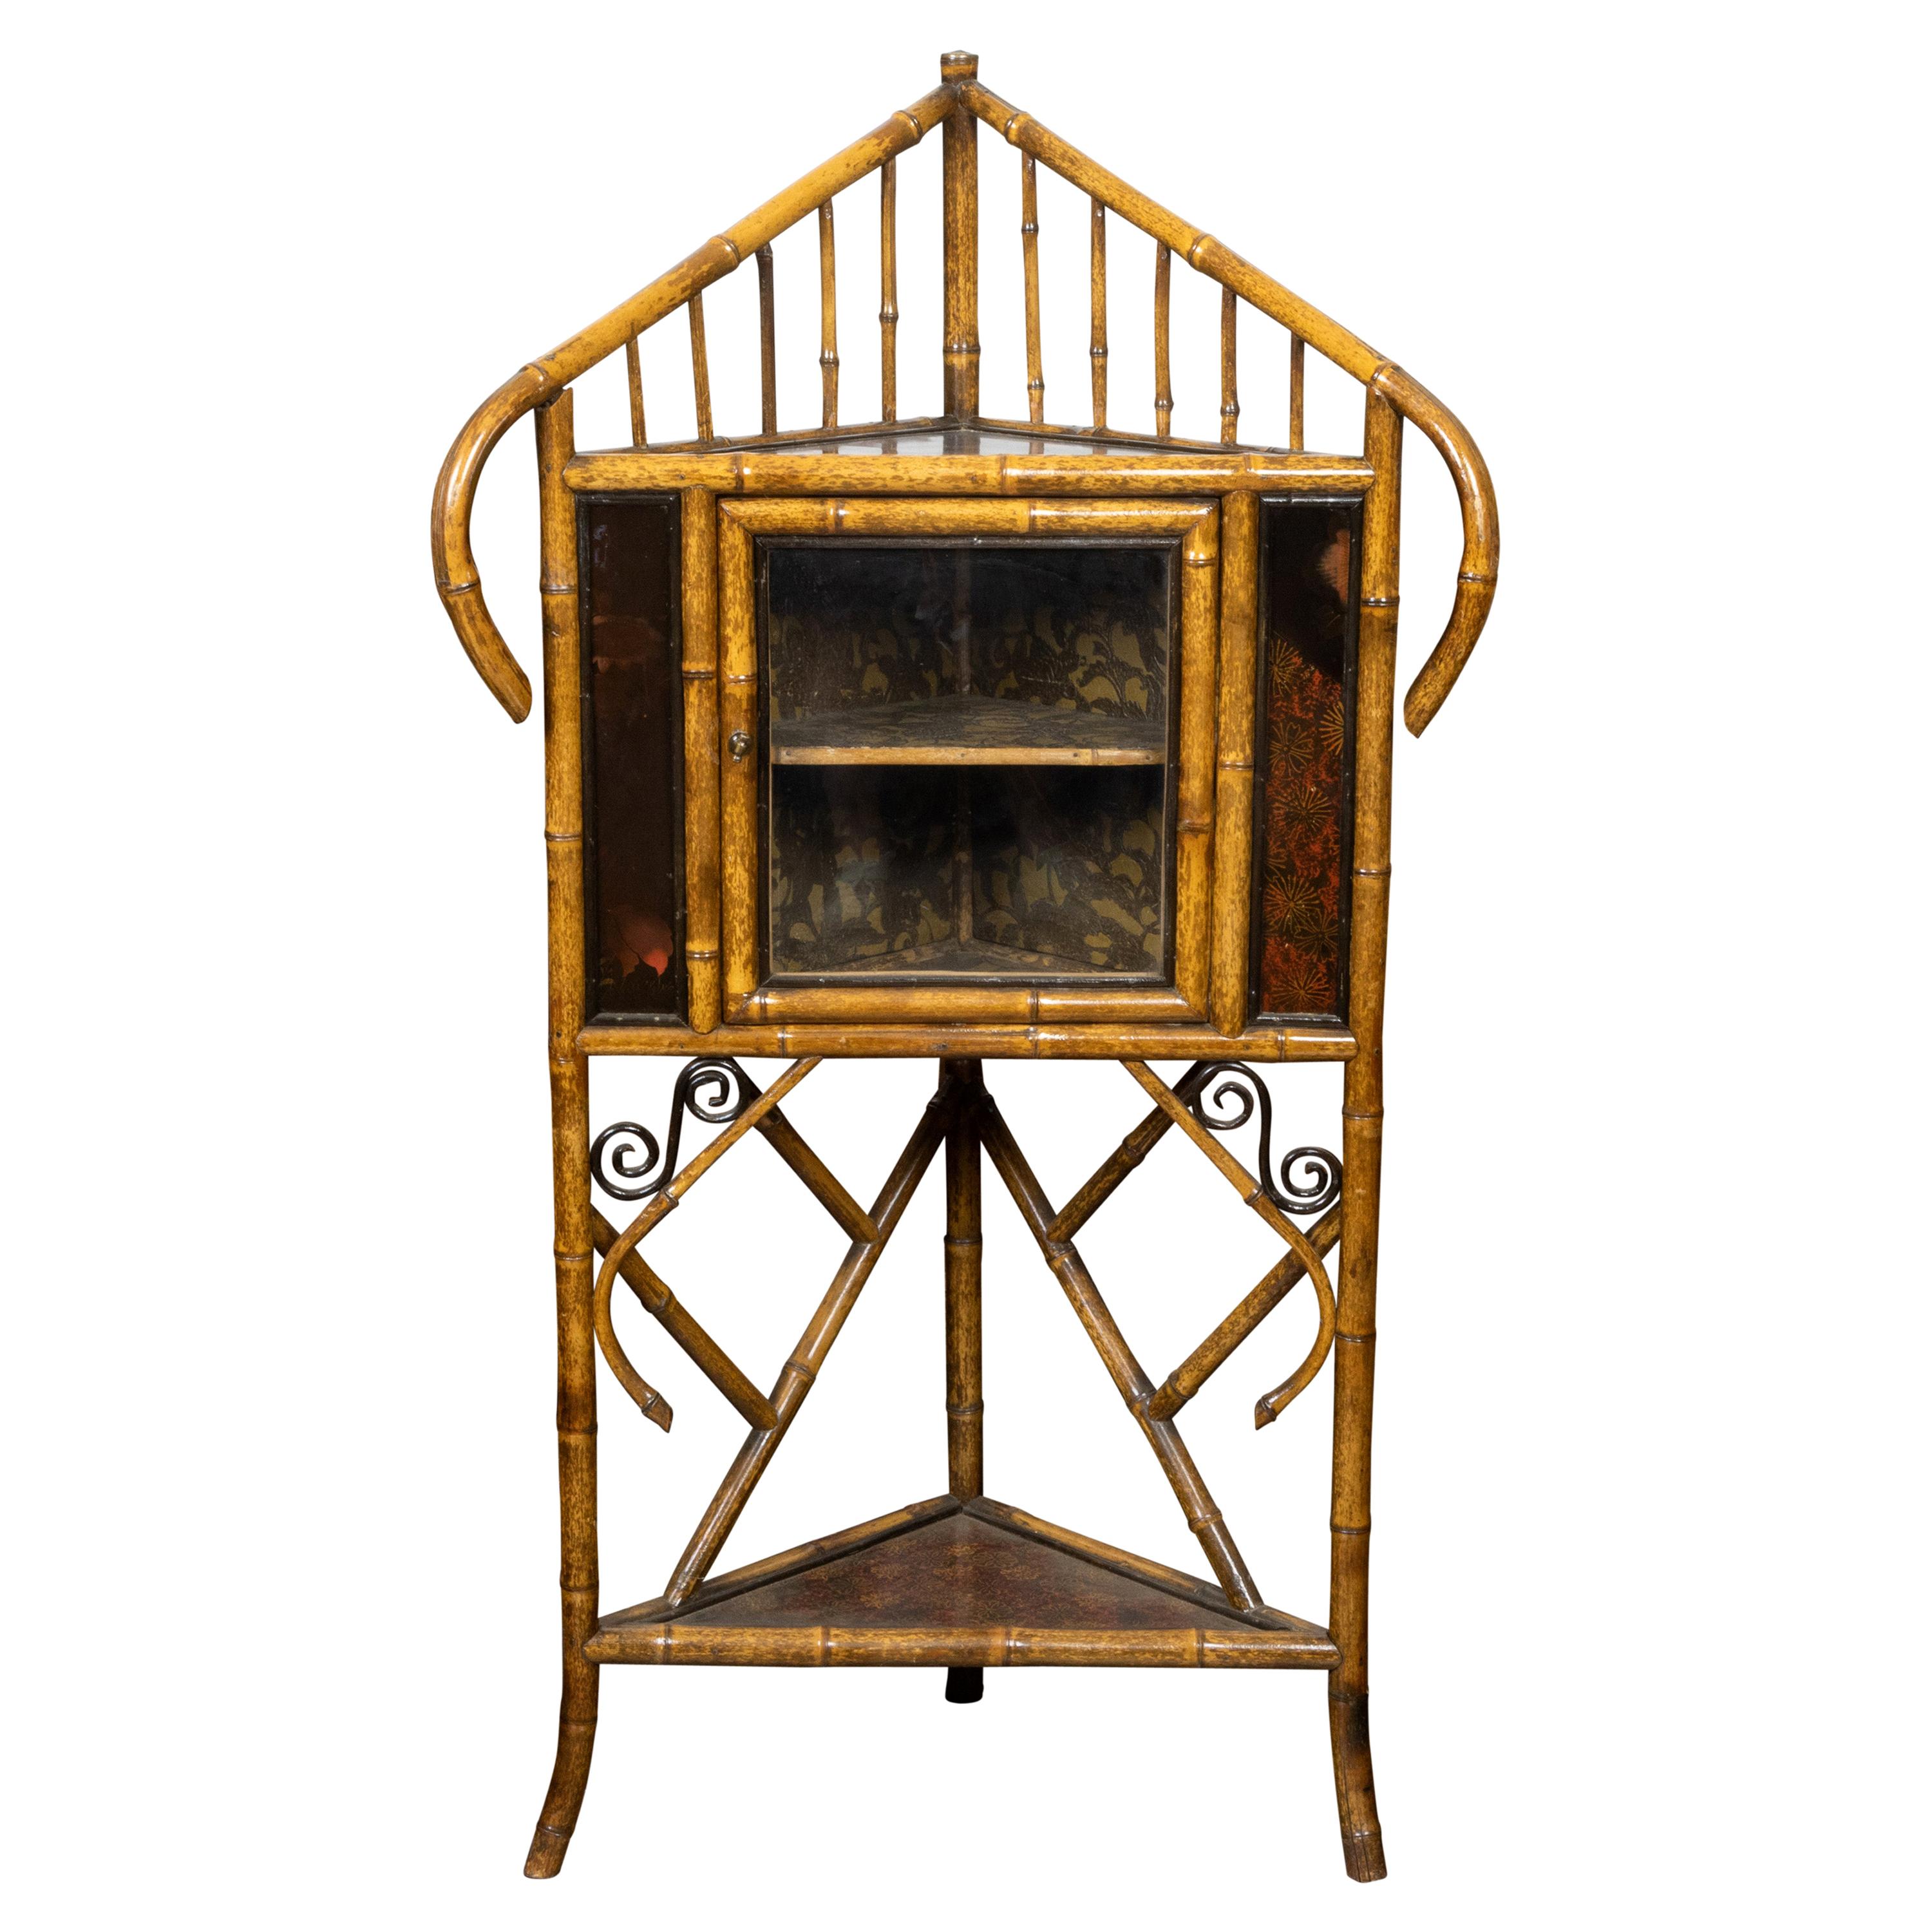 English 1900s Freestanding Bamboo Corner Display Shelf with Glass Door